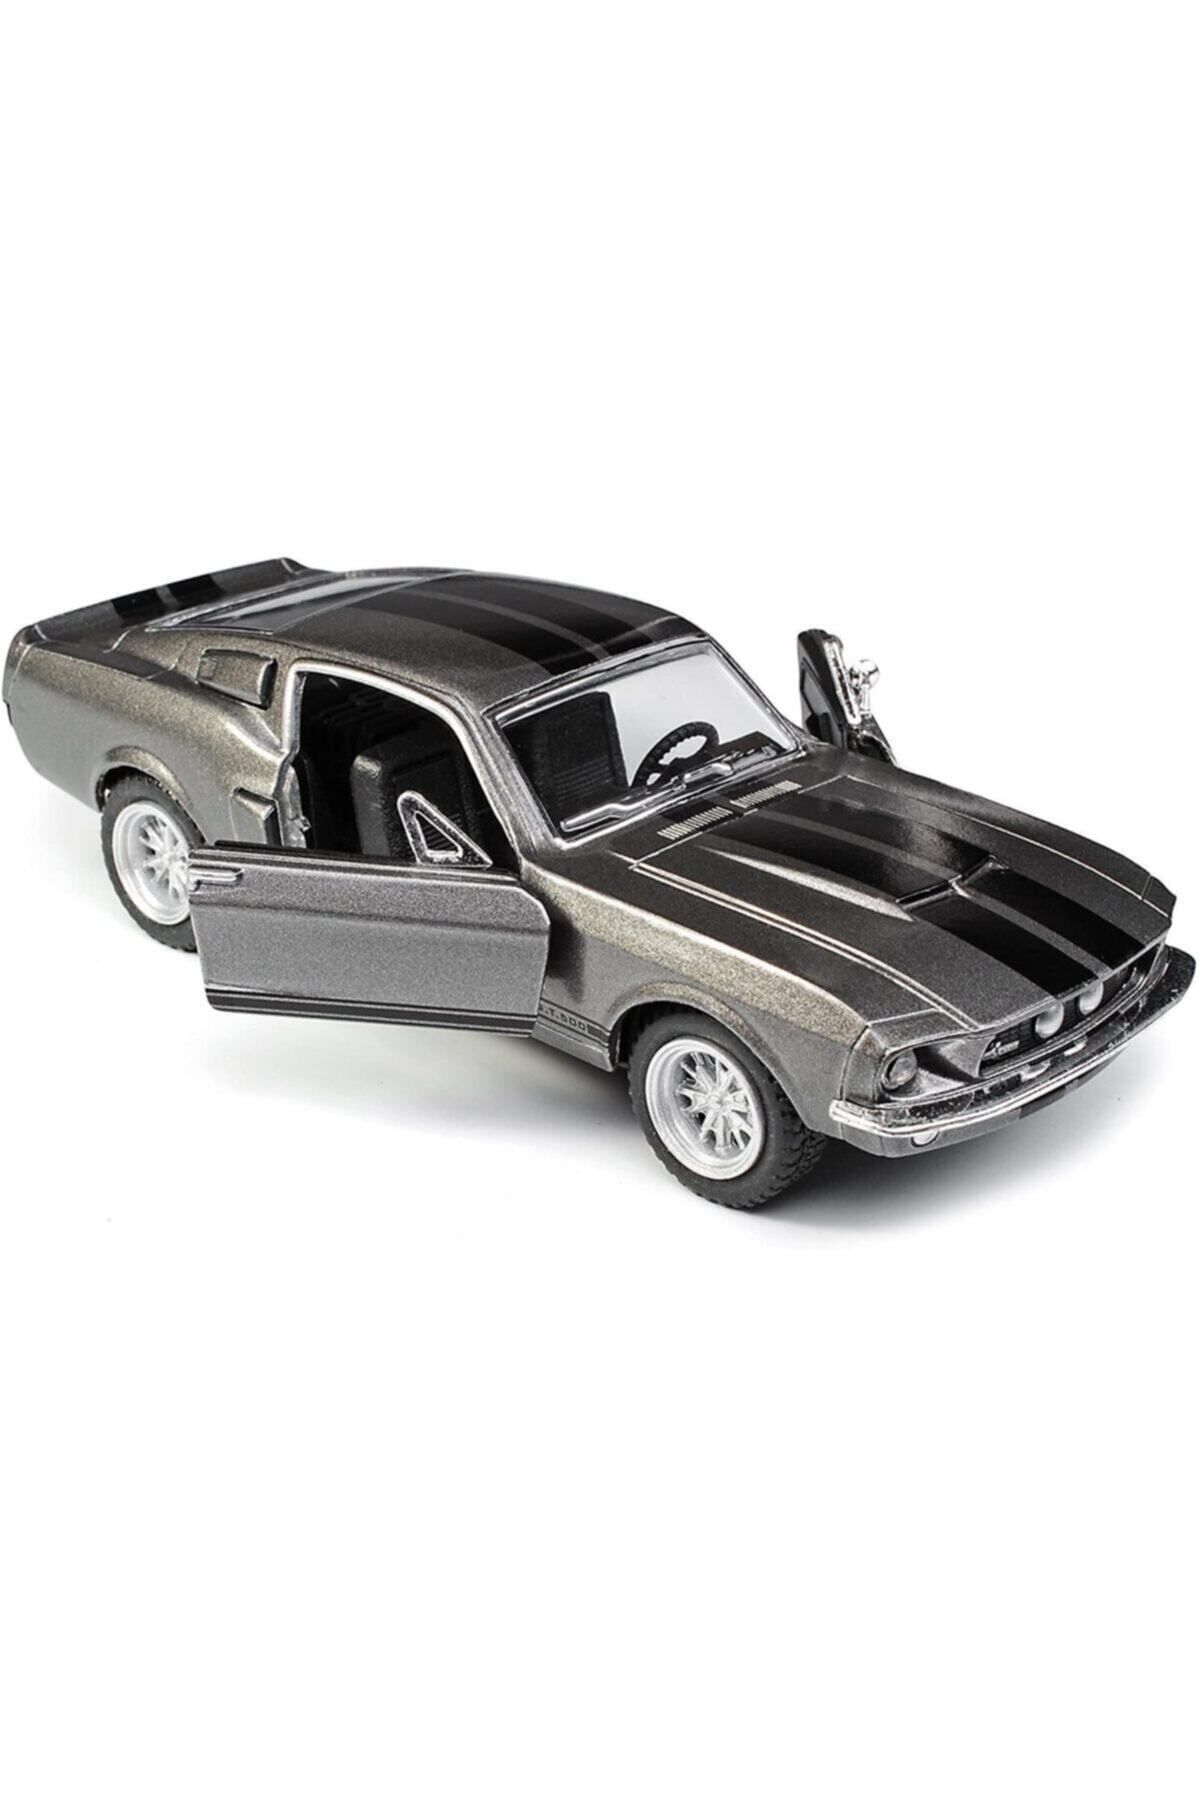 Kinsmart 1967 Shelby Gt500 Çekbırak Diecast Model Araba